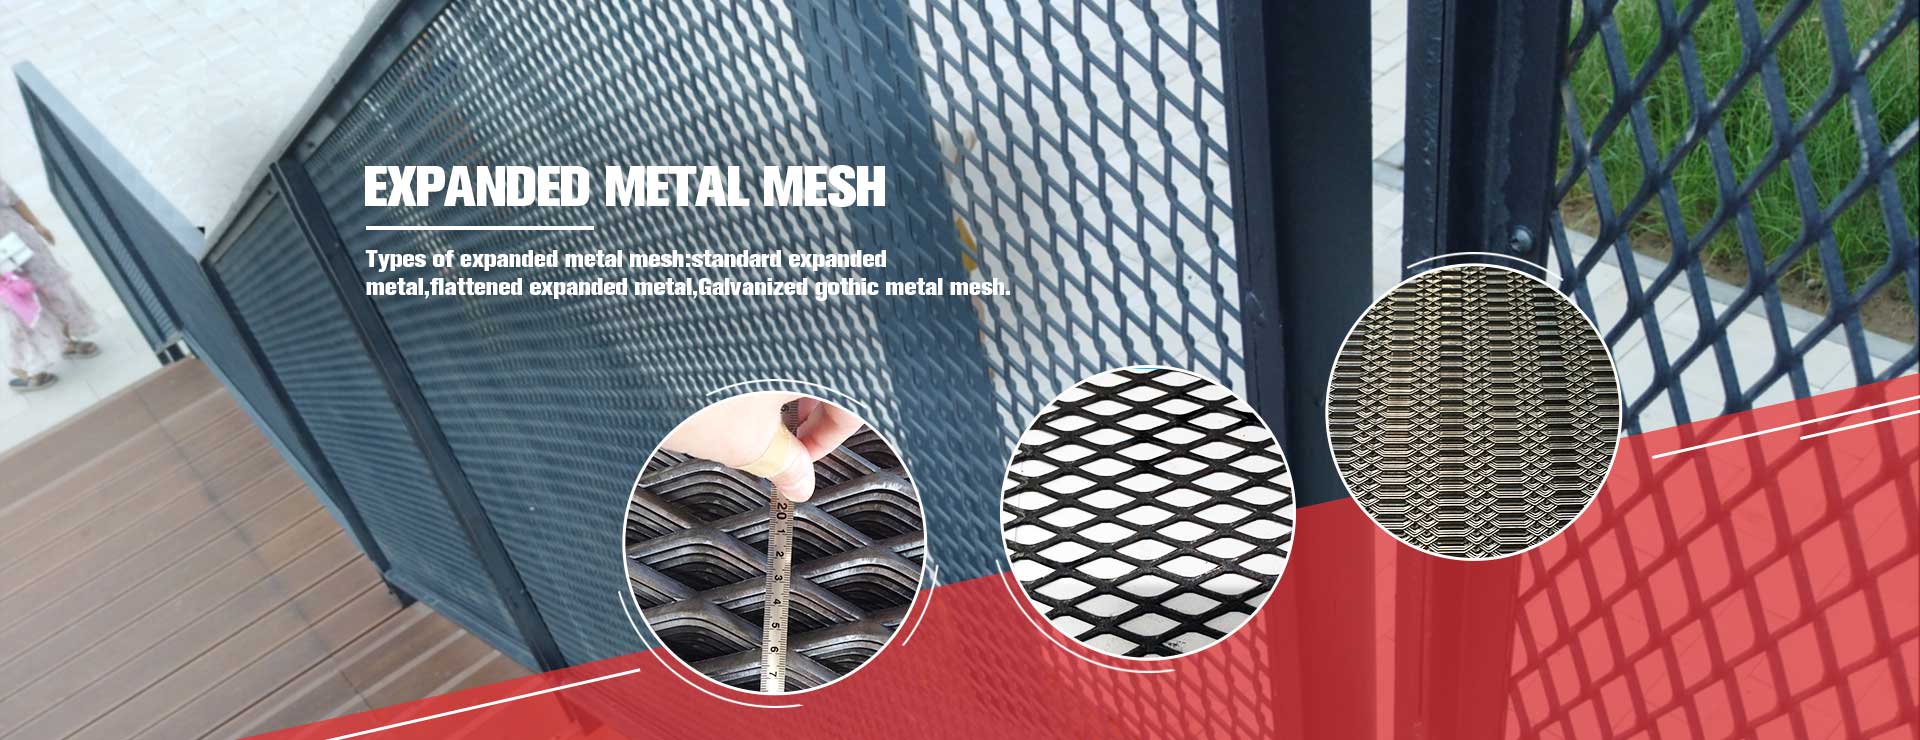 expanded metal mesh panels